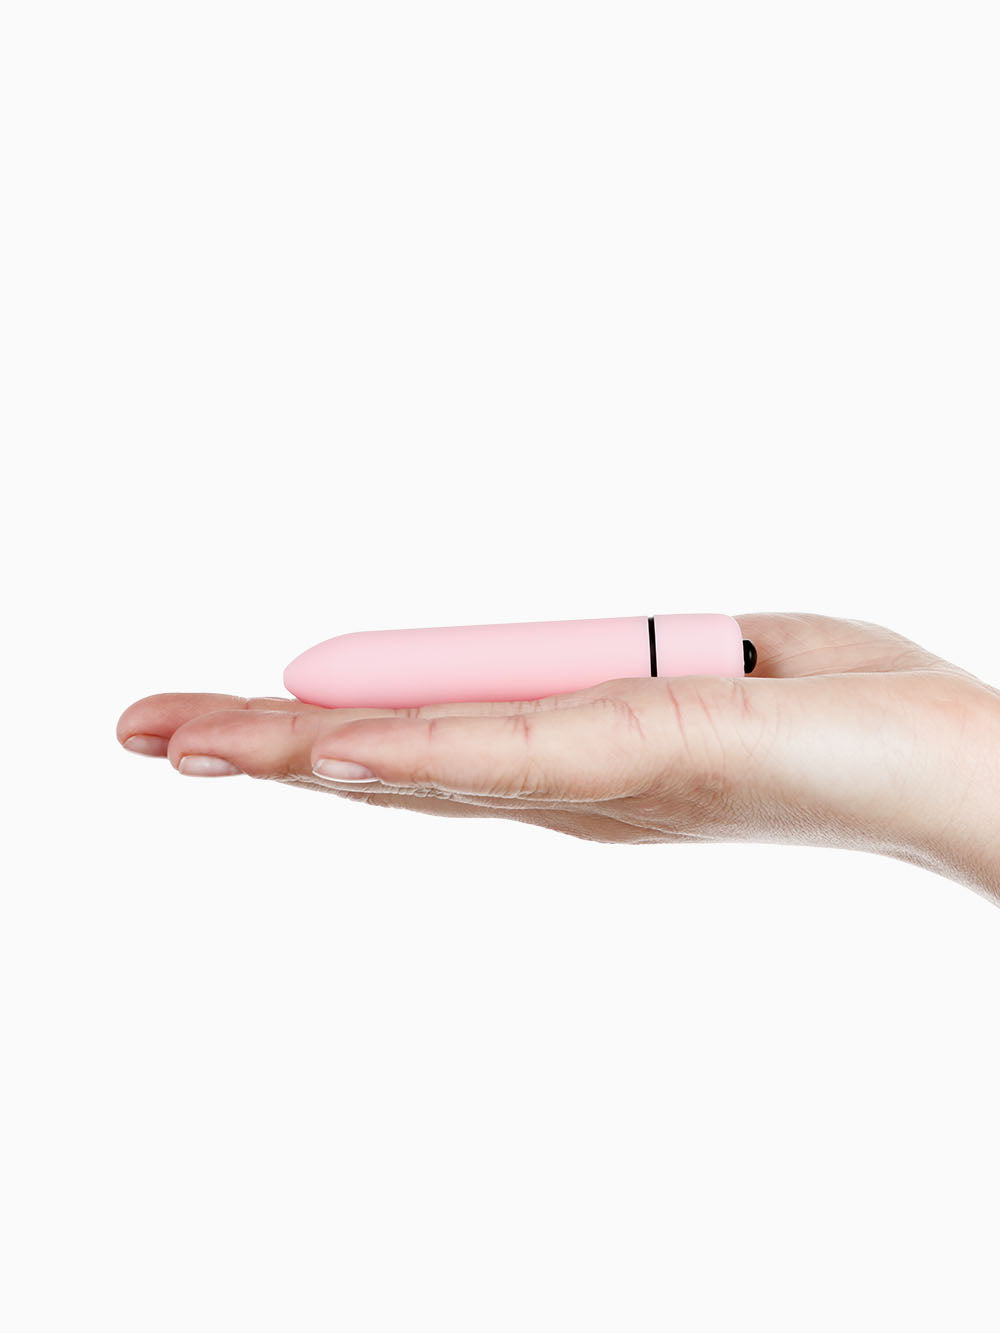 Pillow Talk Bullet Vibrator - Pink, 3.5 Inches